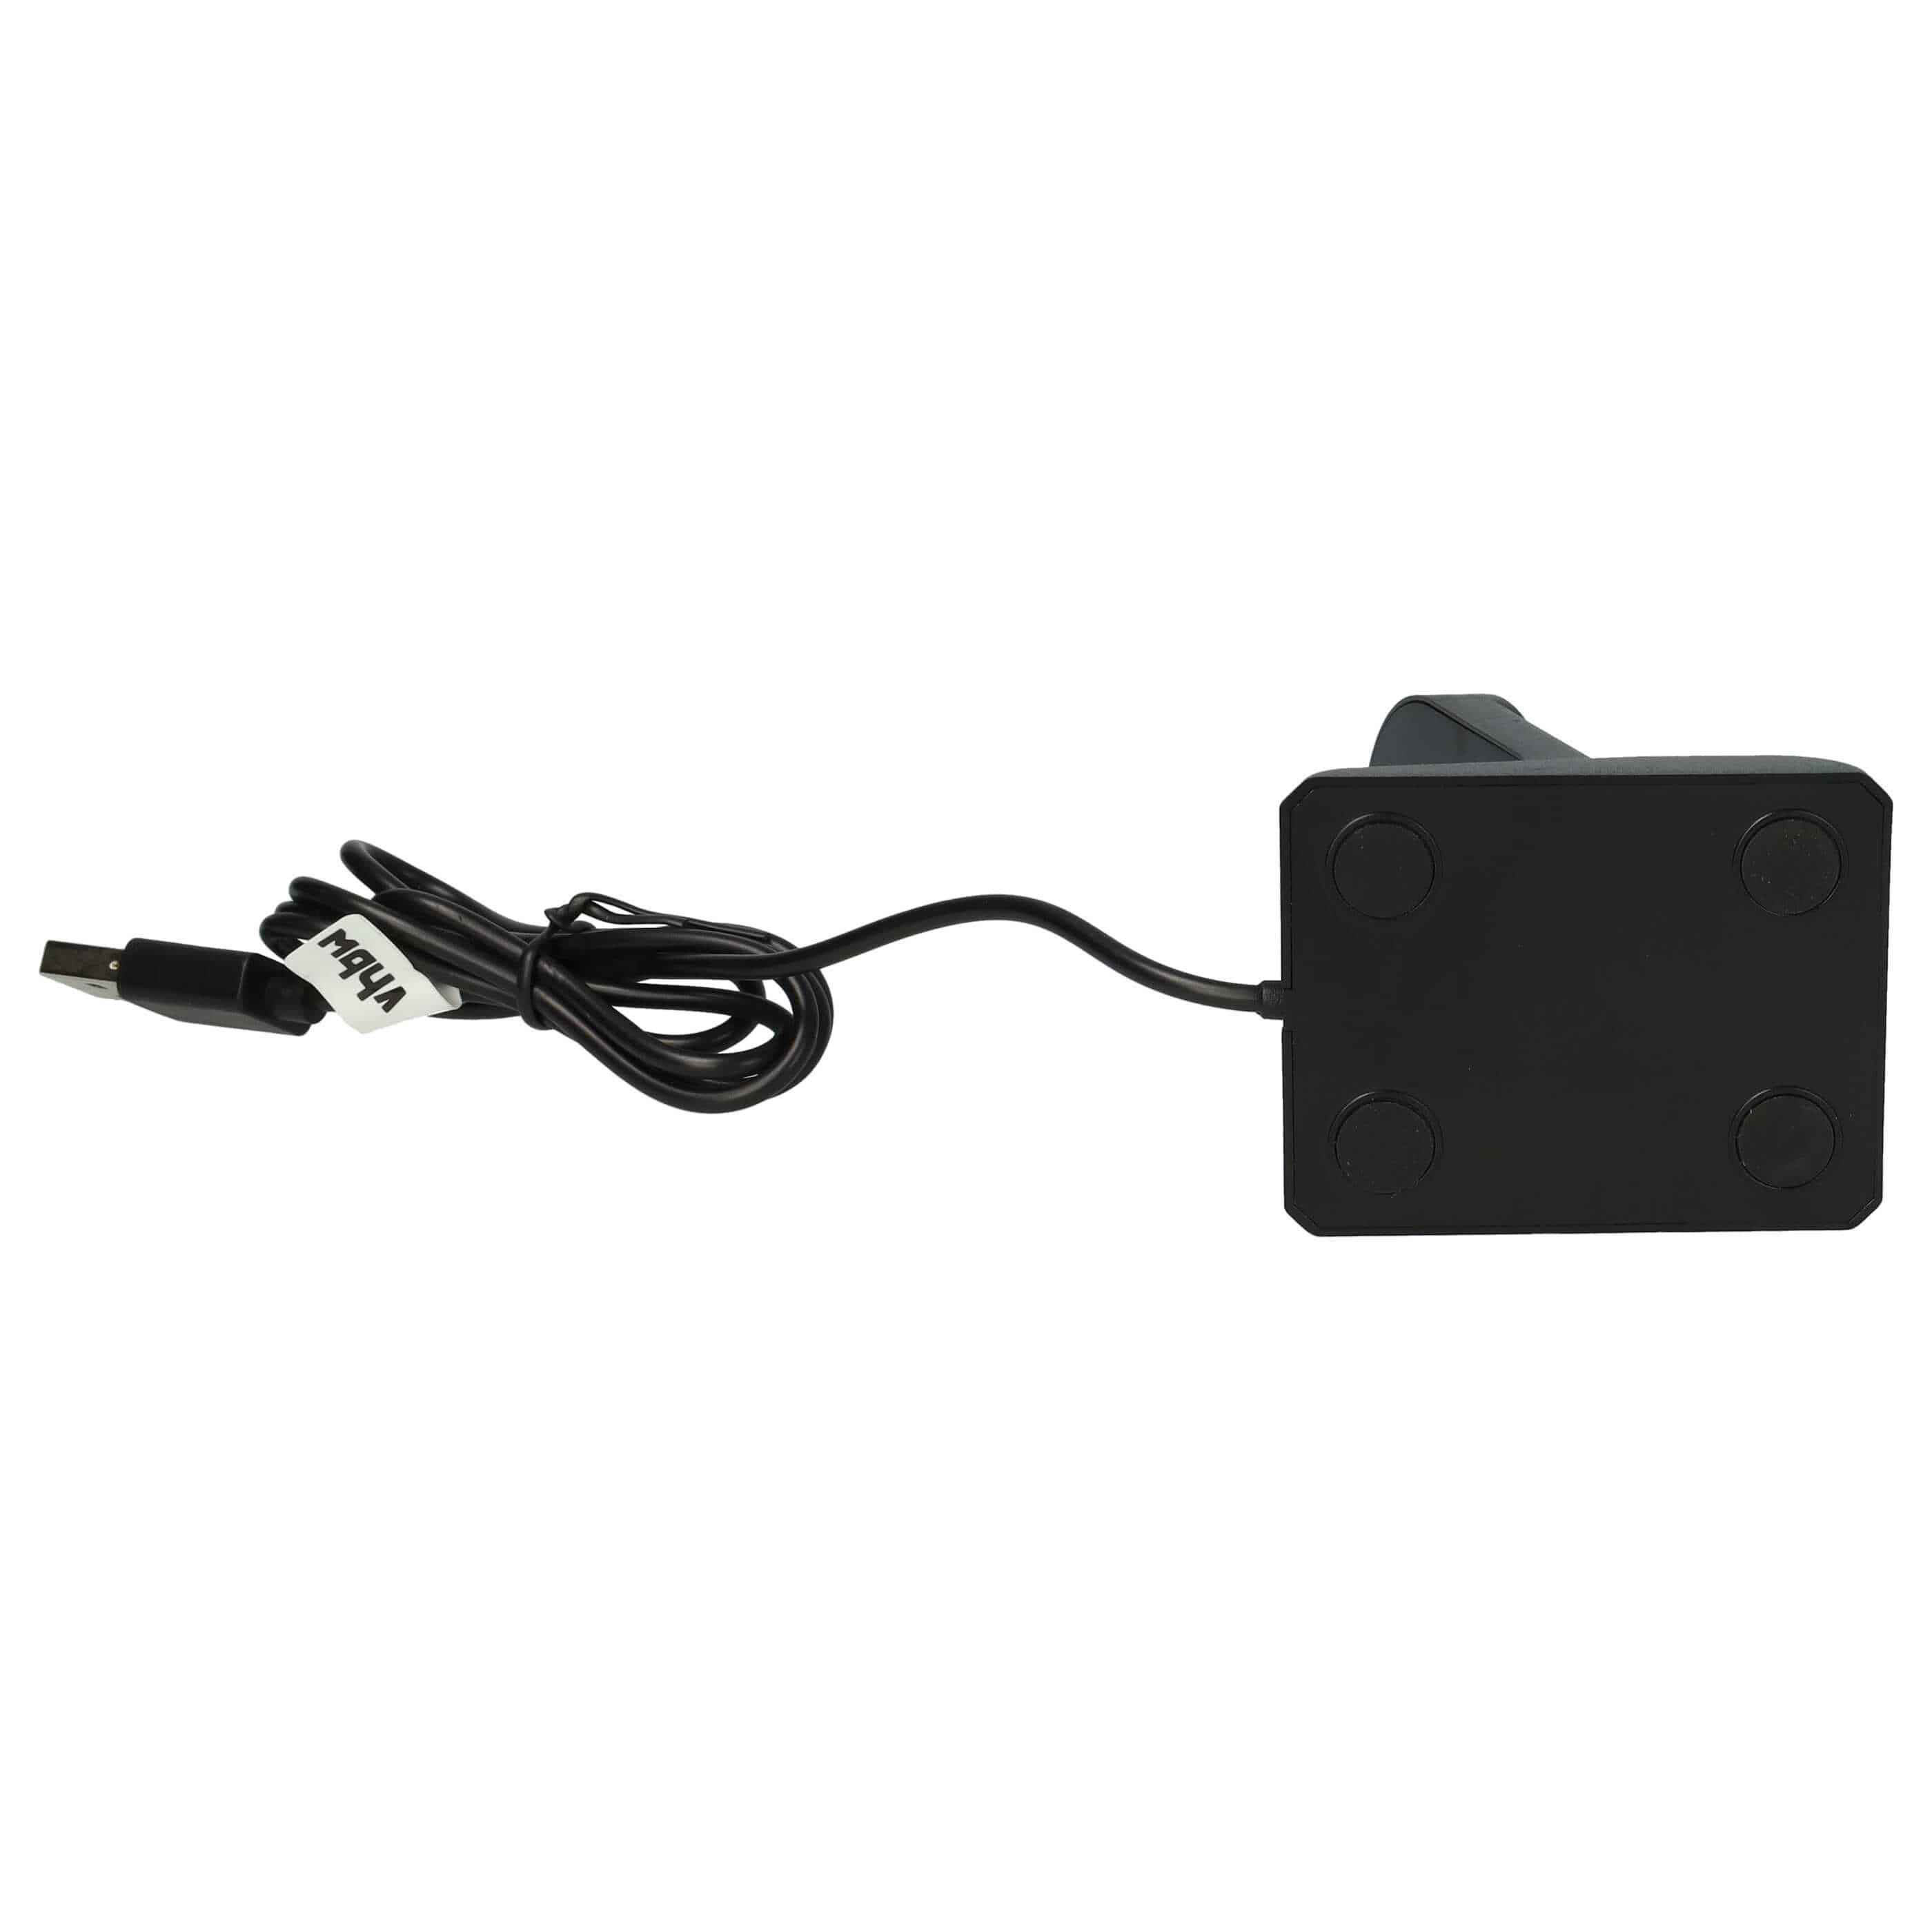 Stazione di ricarica USB per smartwatch Mobvoi TicWatch - base + cavo 100 cm nero